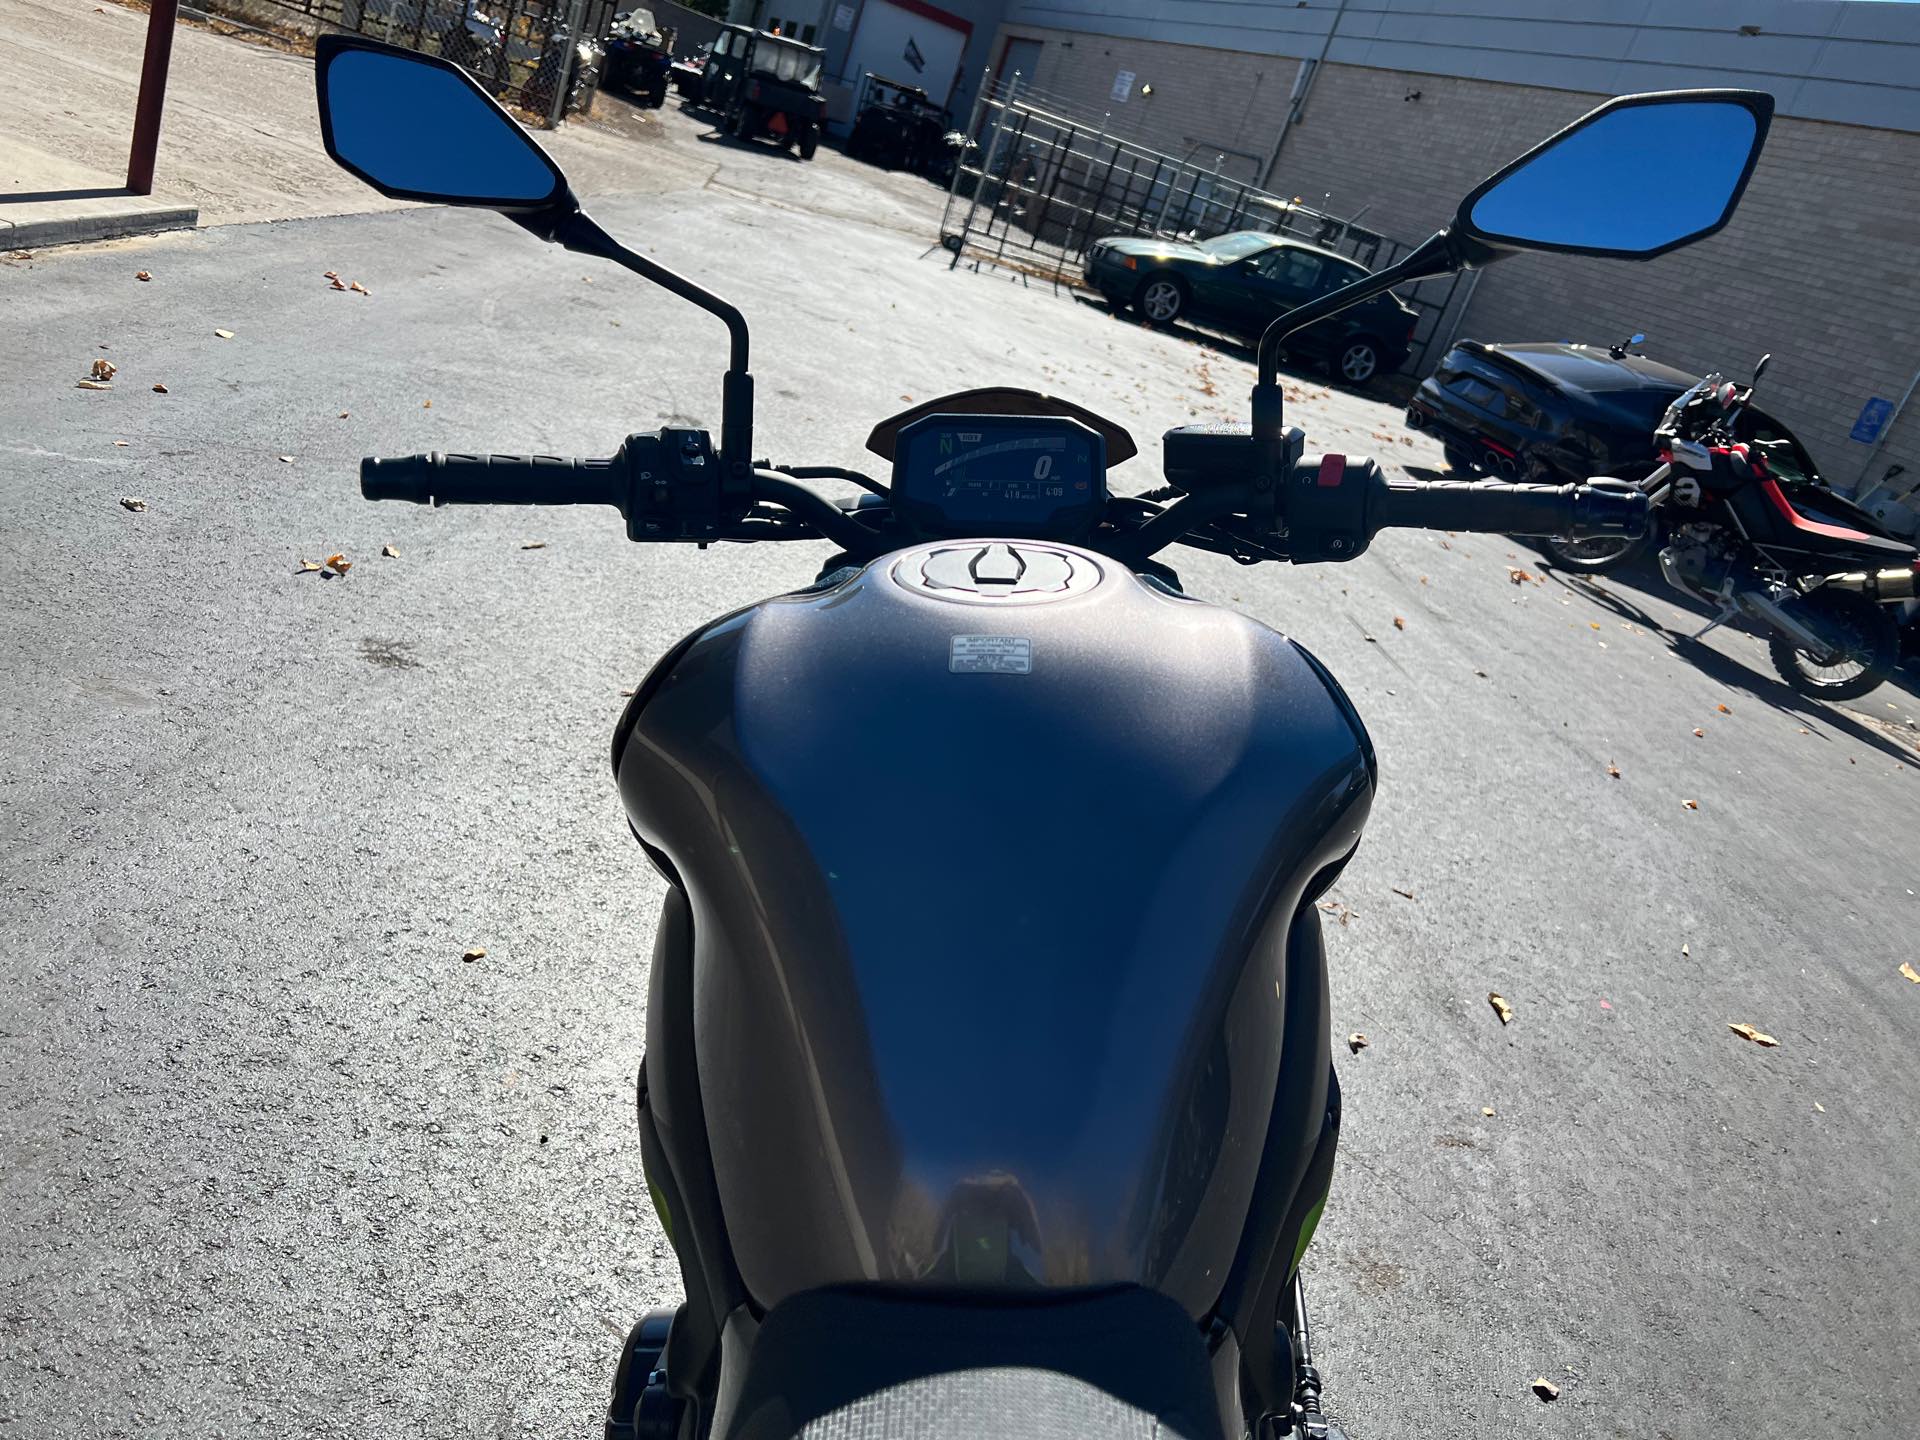 2020 Kawasaki Z900 ABS at Aces Motorcycles - Fort Collins